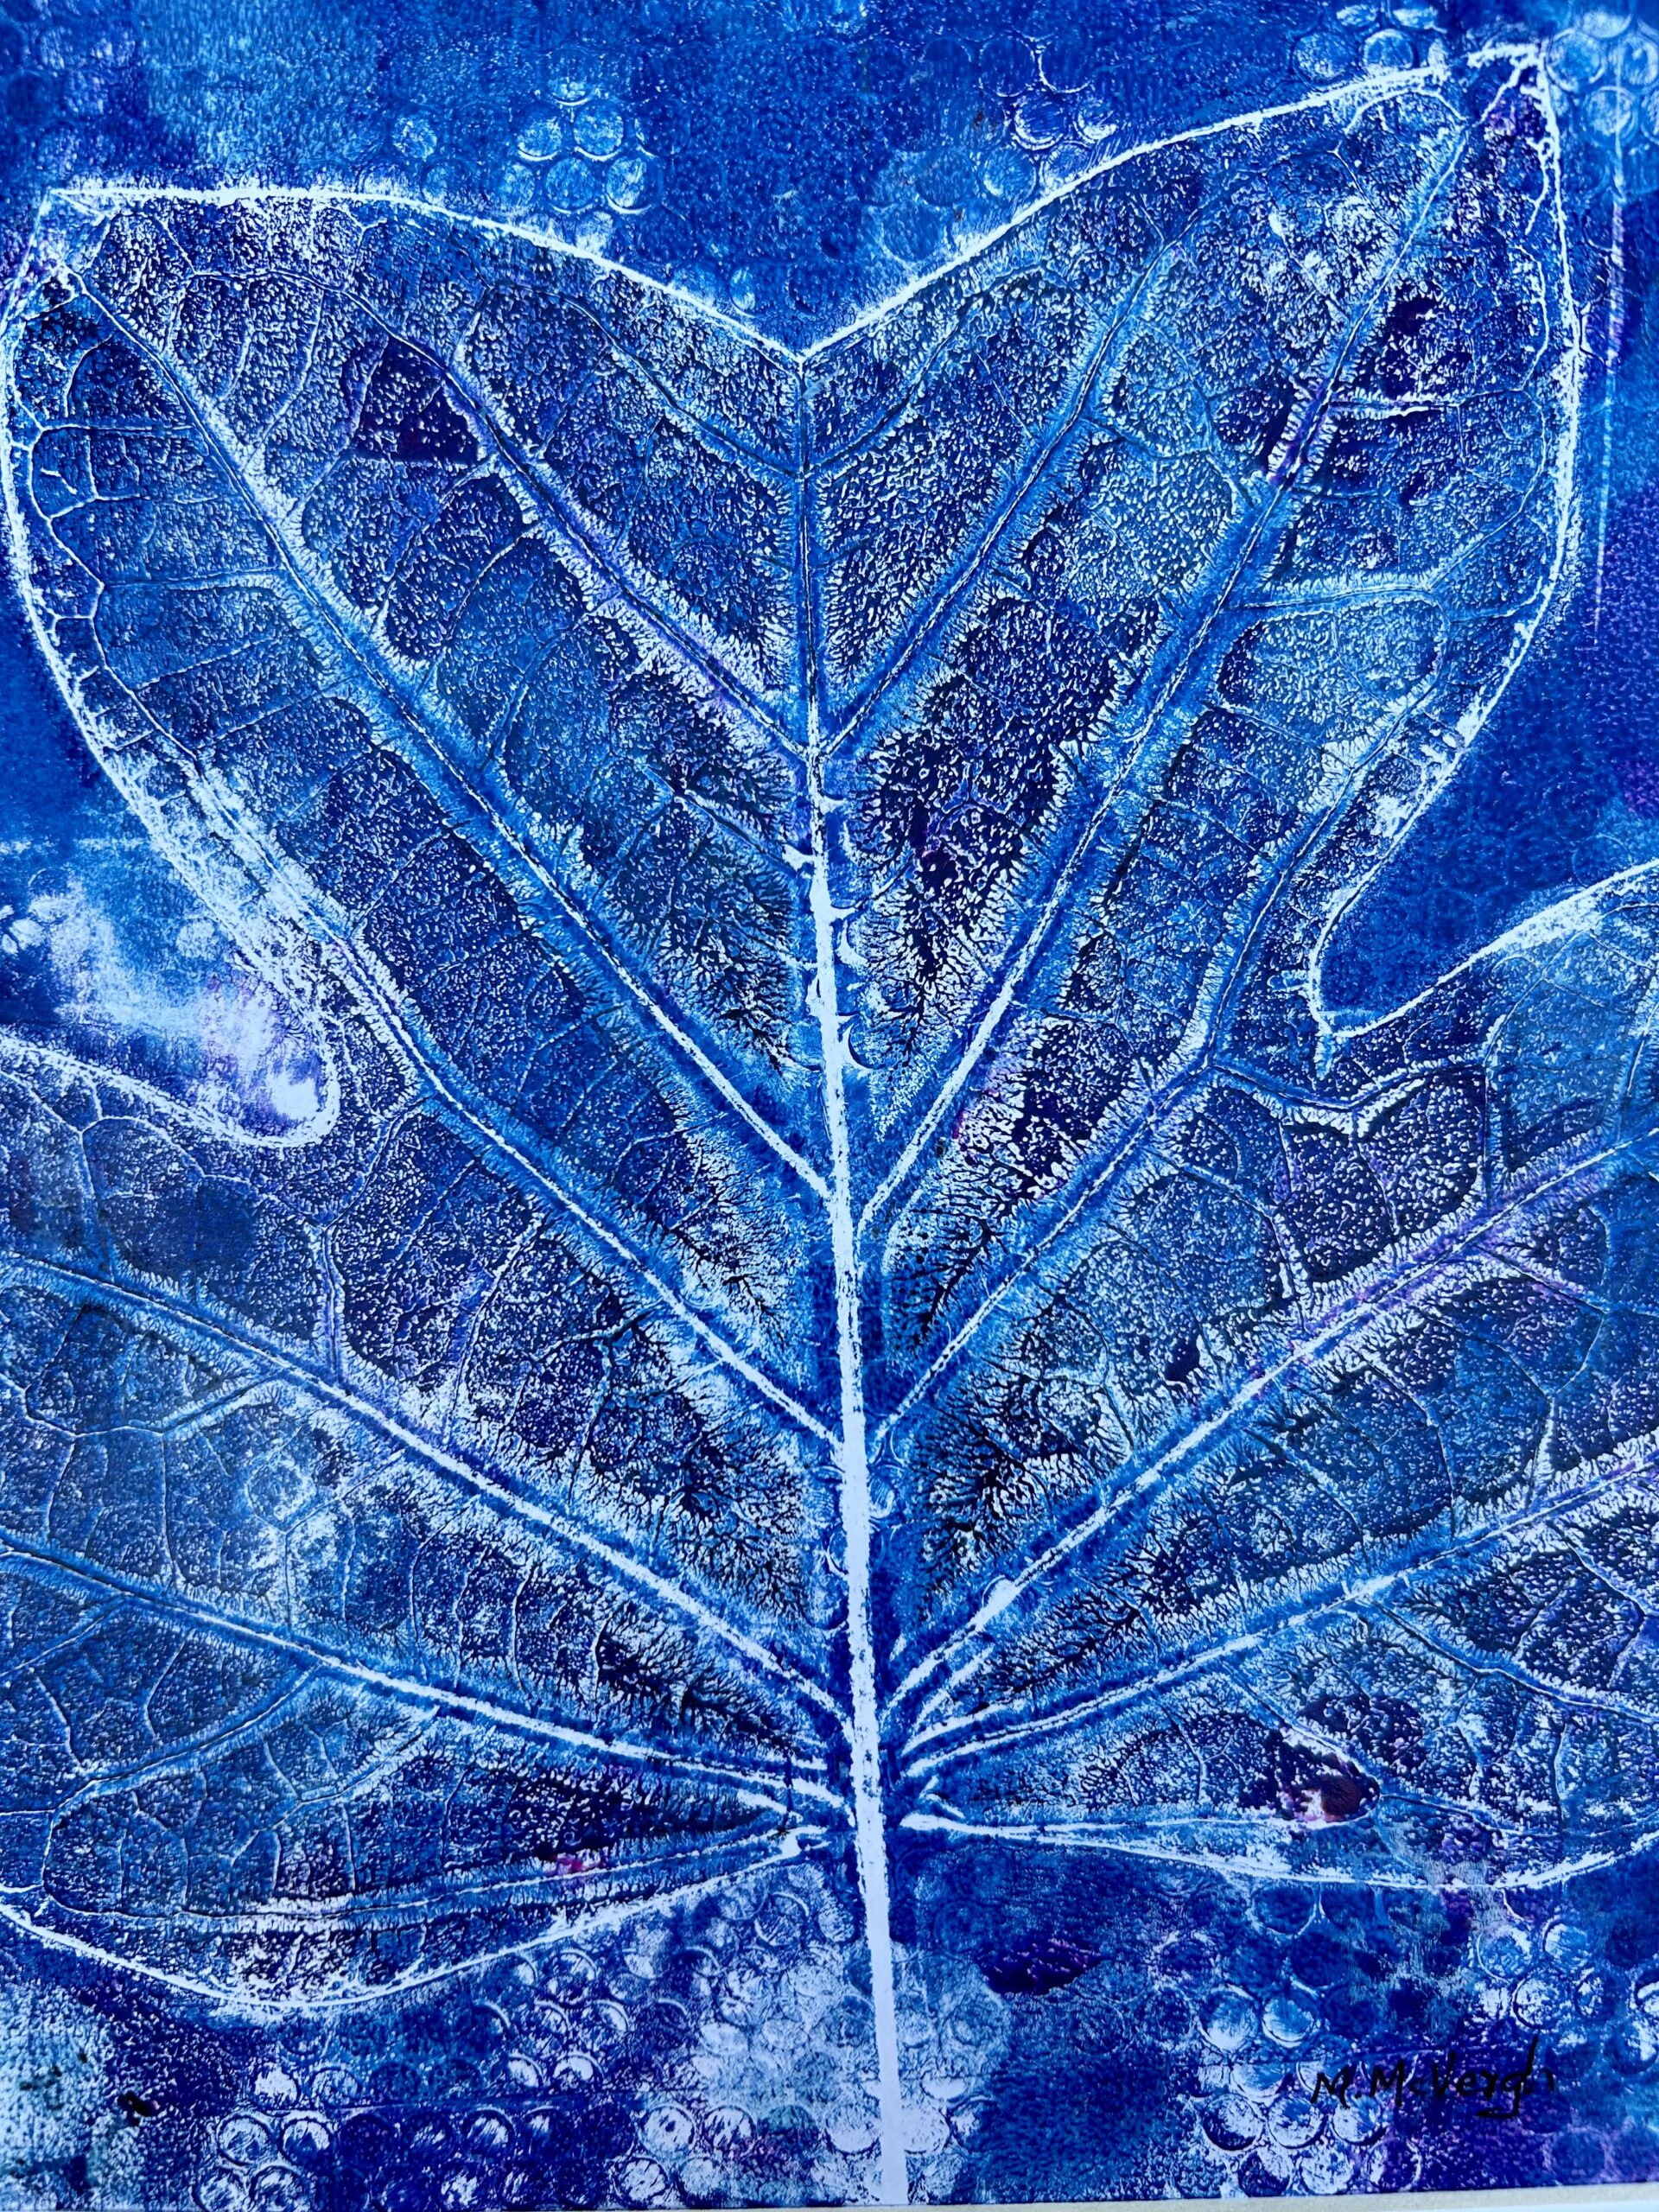 Blue and white Leaf Botanical Hand Pulled Print